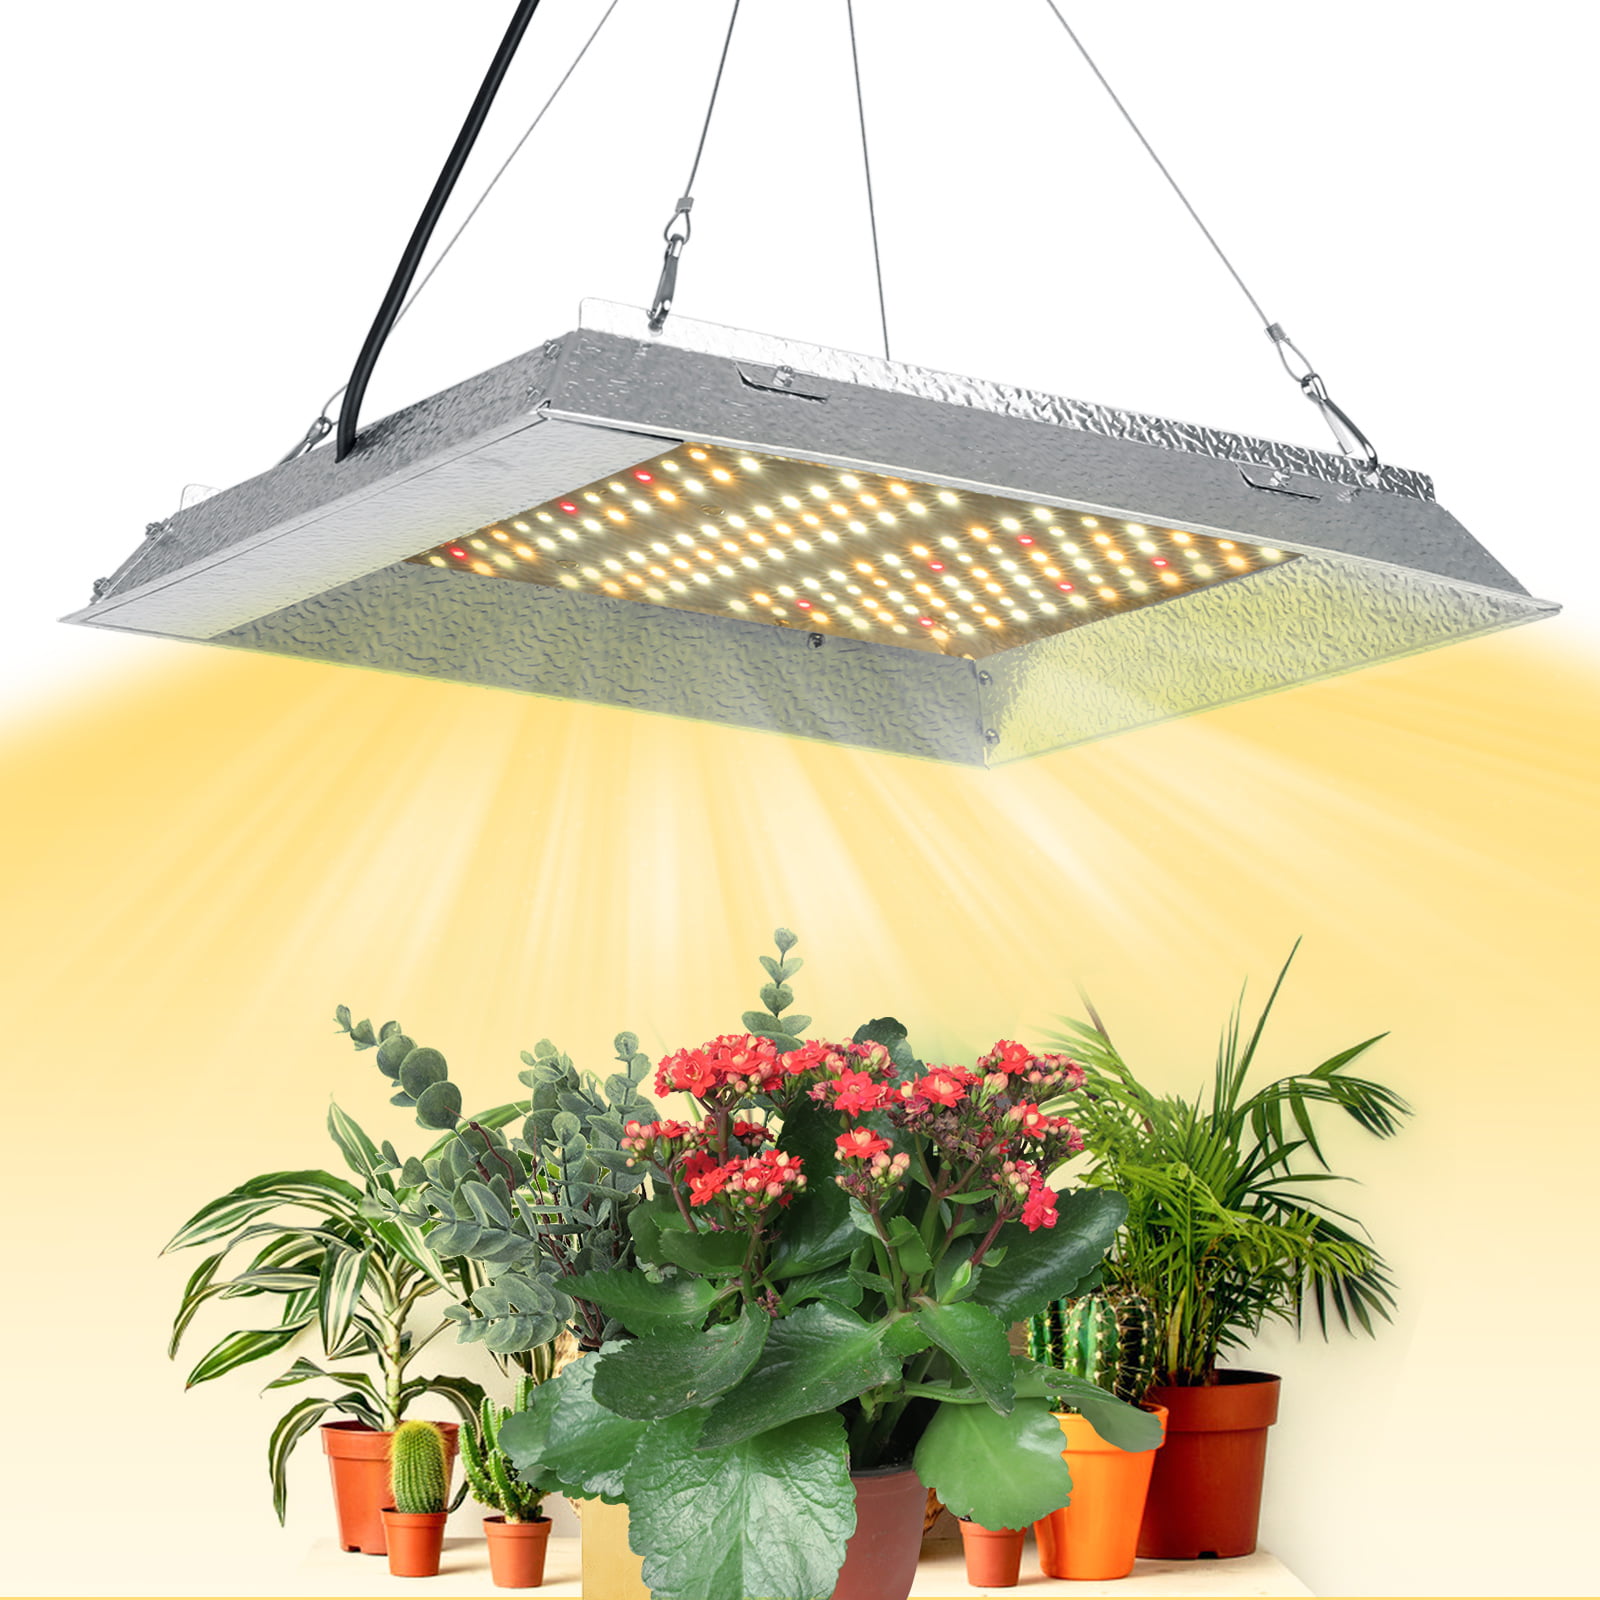 600W LED Grow Light Hydroponic Full Spectrum Indoor Veg Flower Plants Lamp BR 